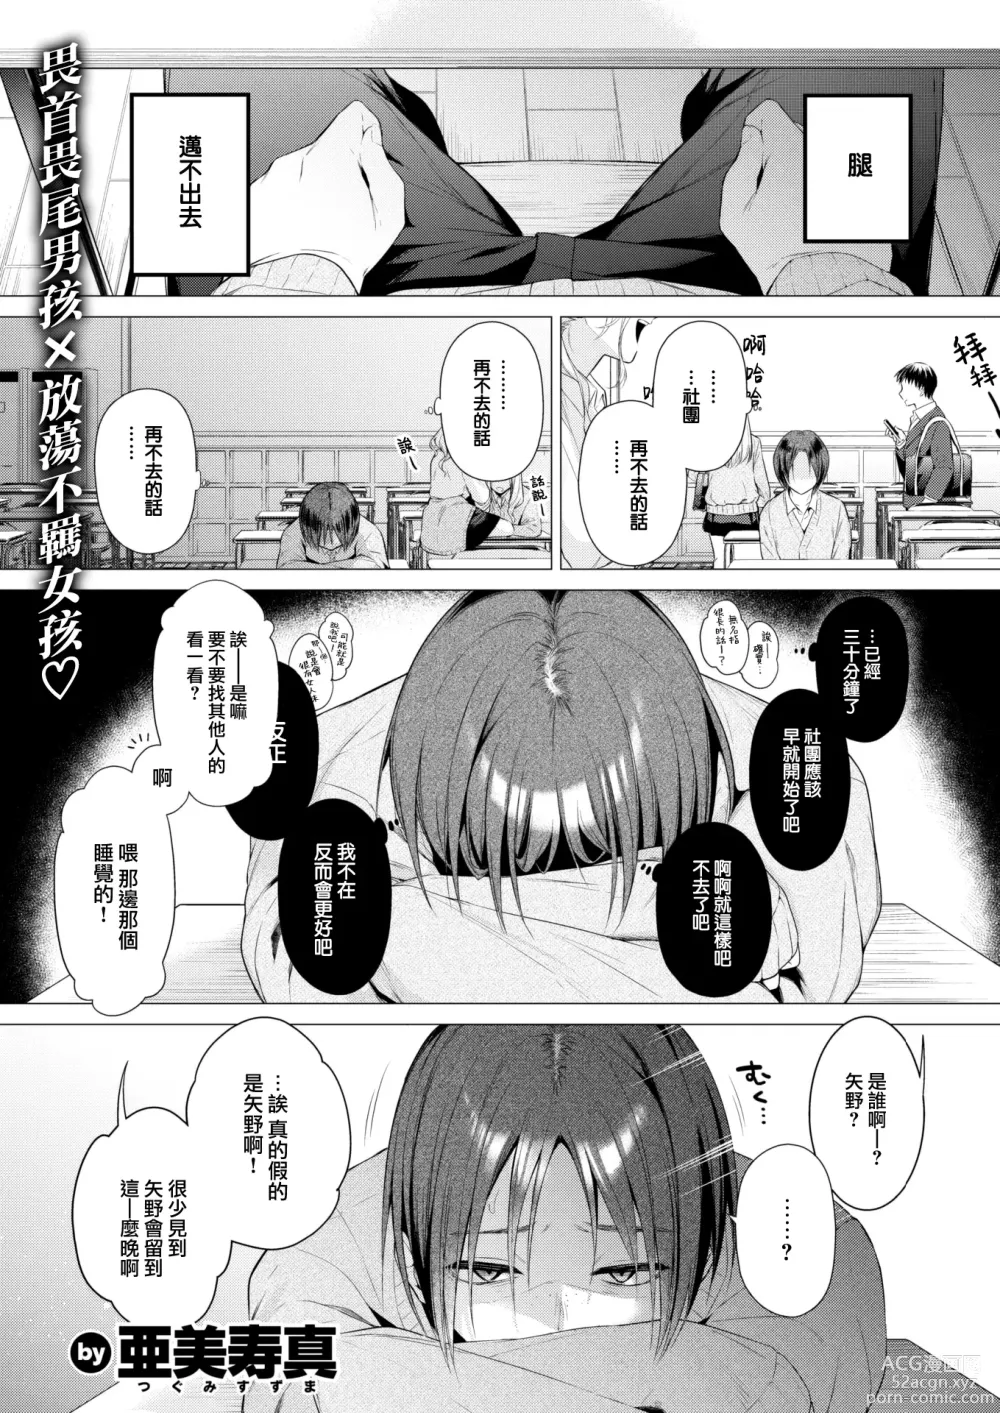 Page 2 of manga Gal to Tomodachi ni Natta